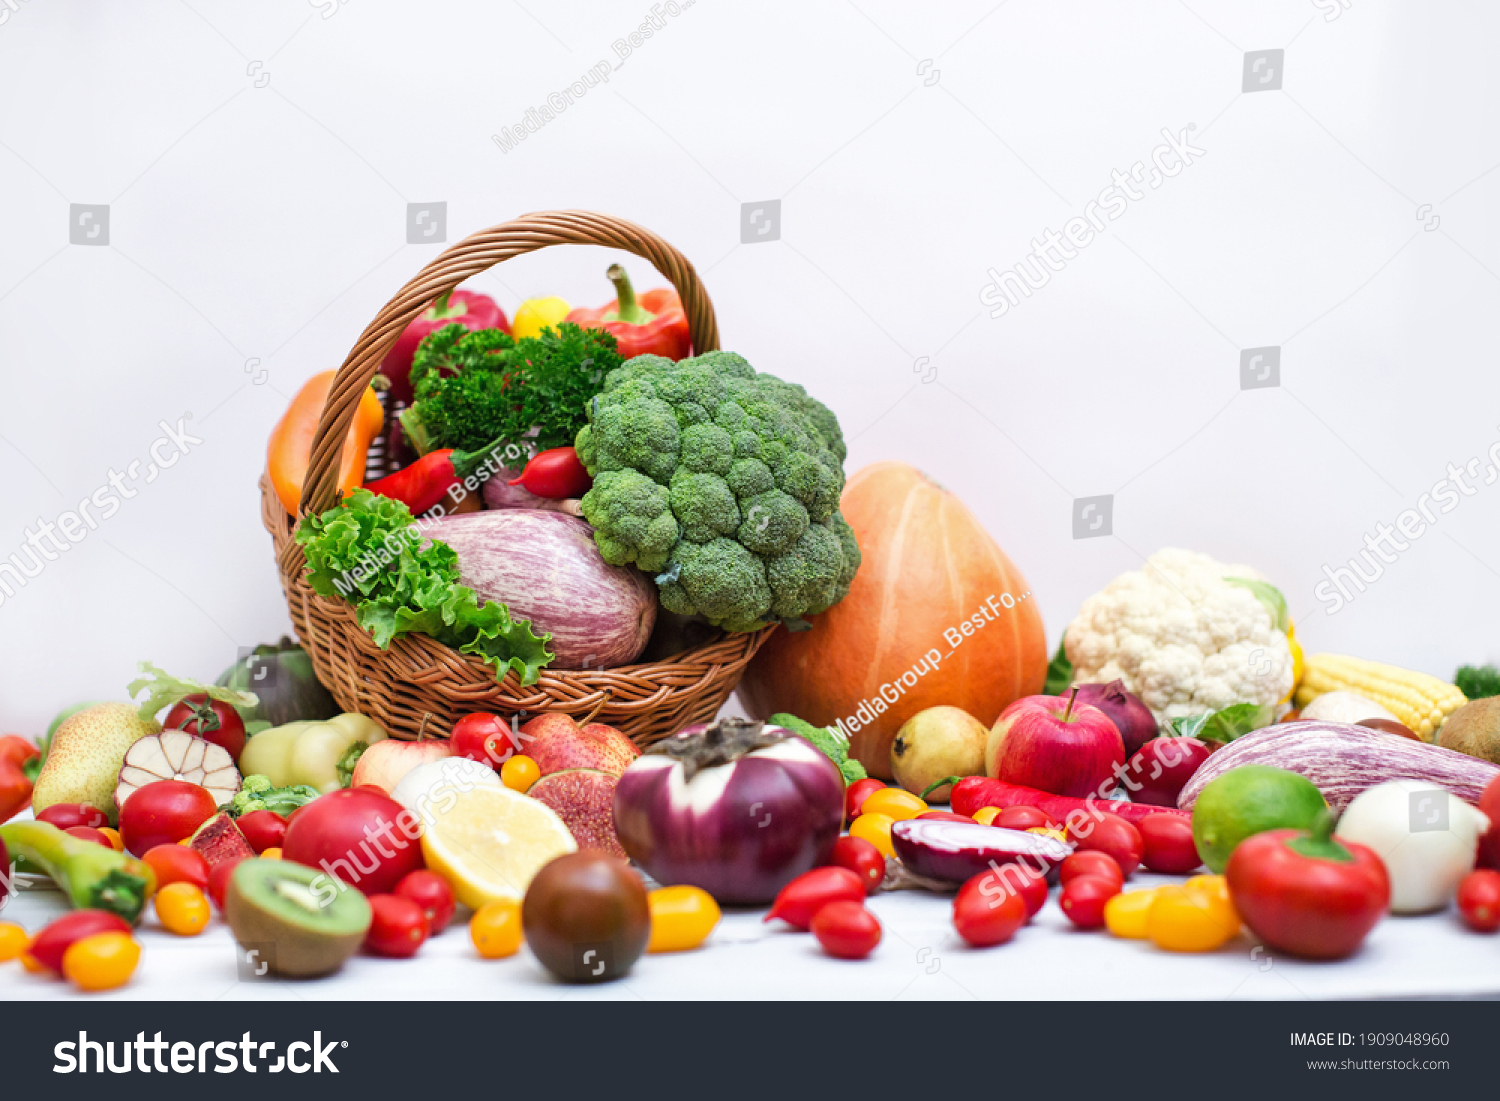 Vegetables Images, Stock Photos & Vectors | Shutterstock